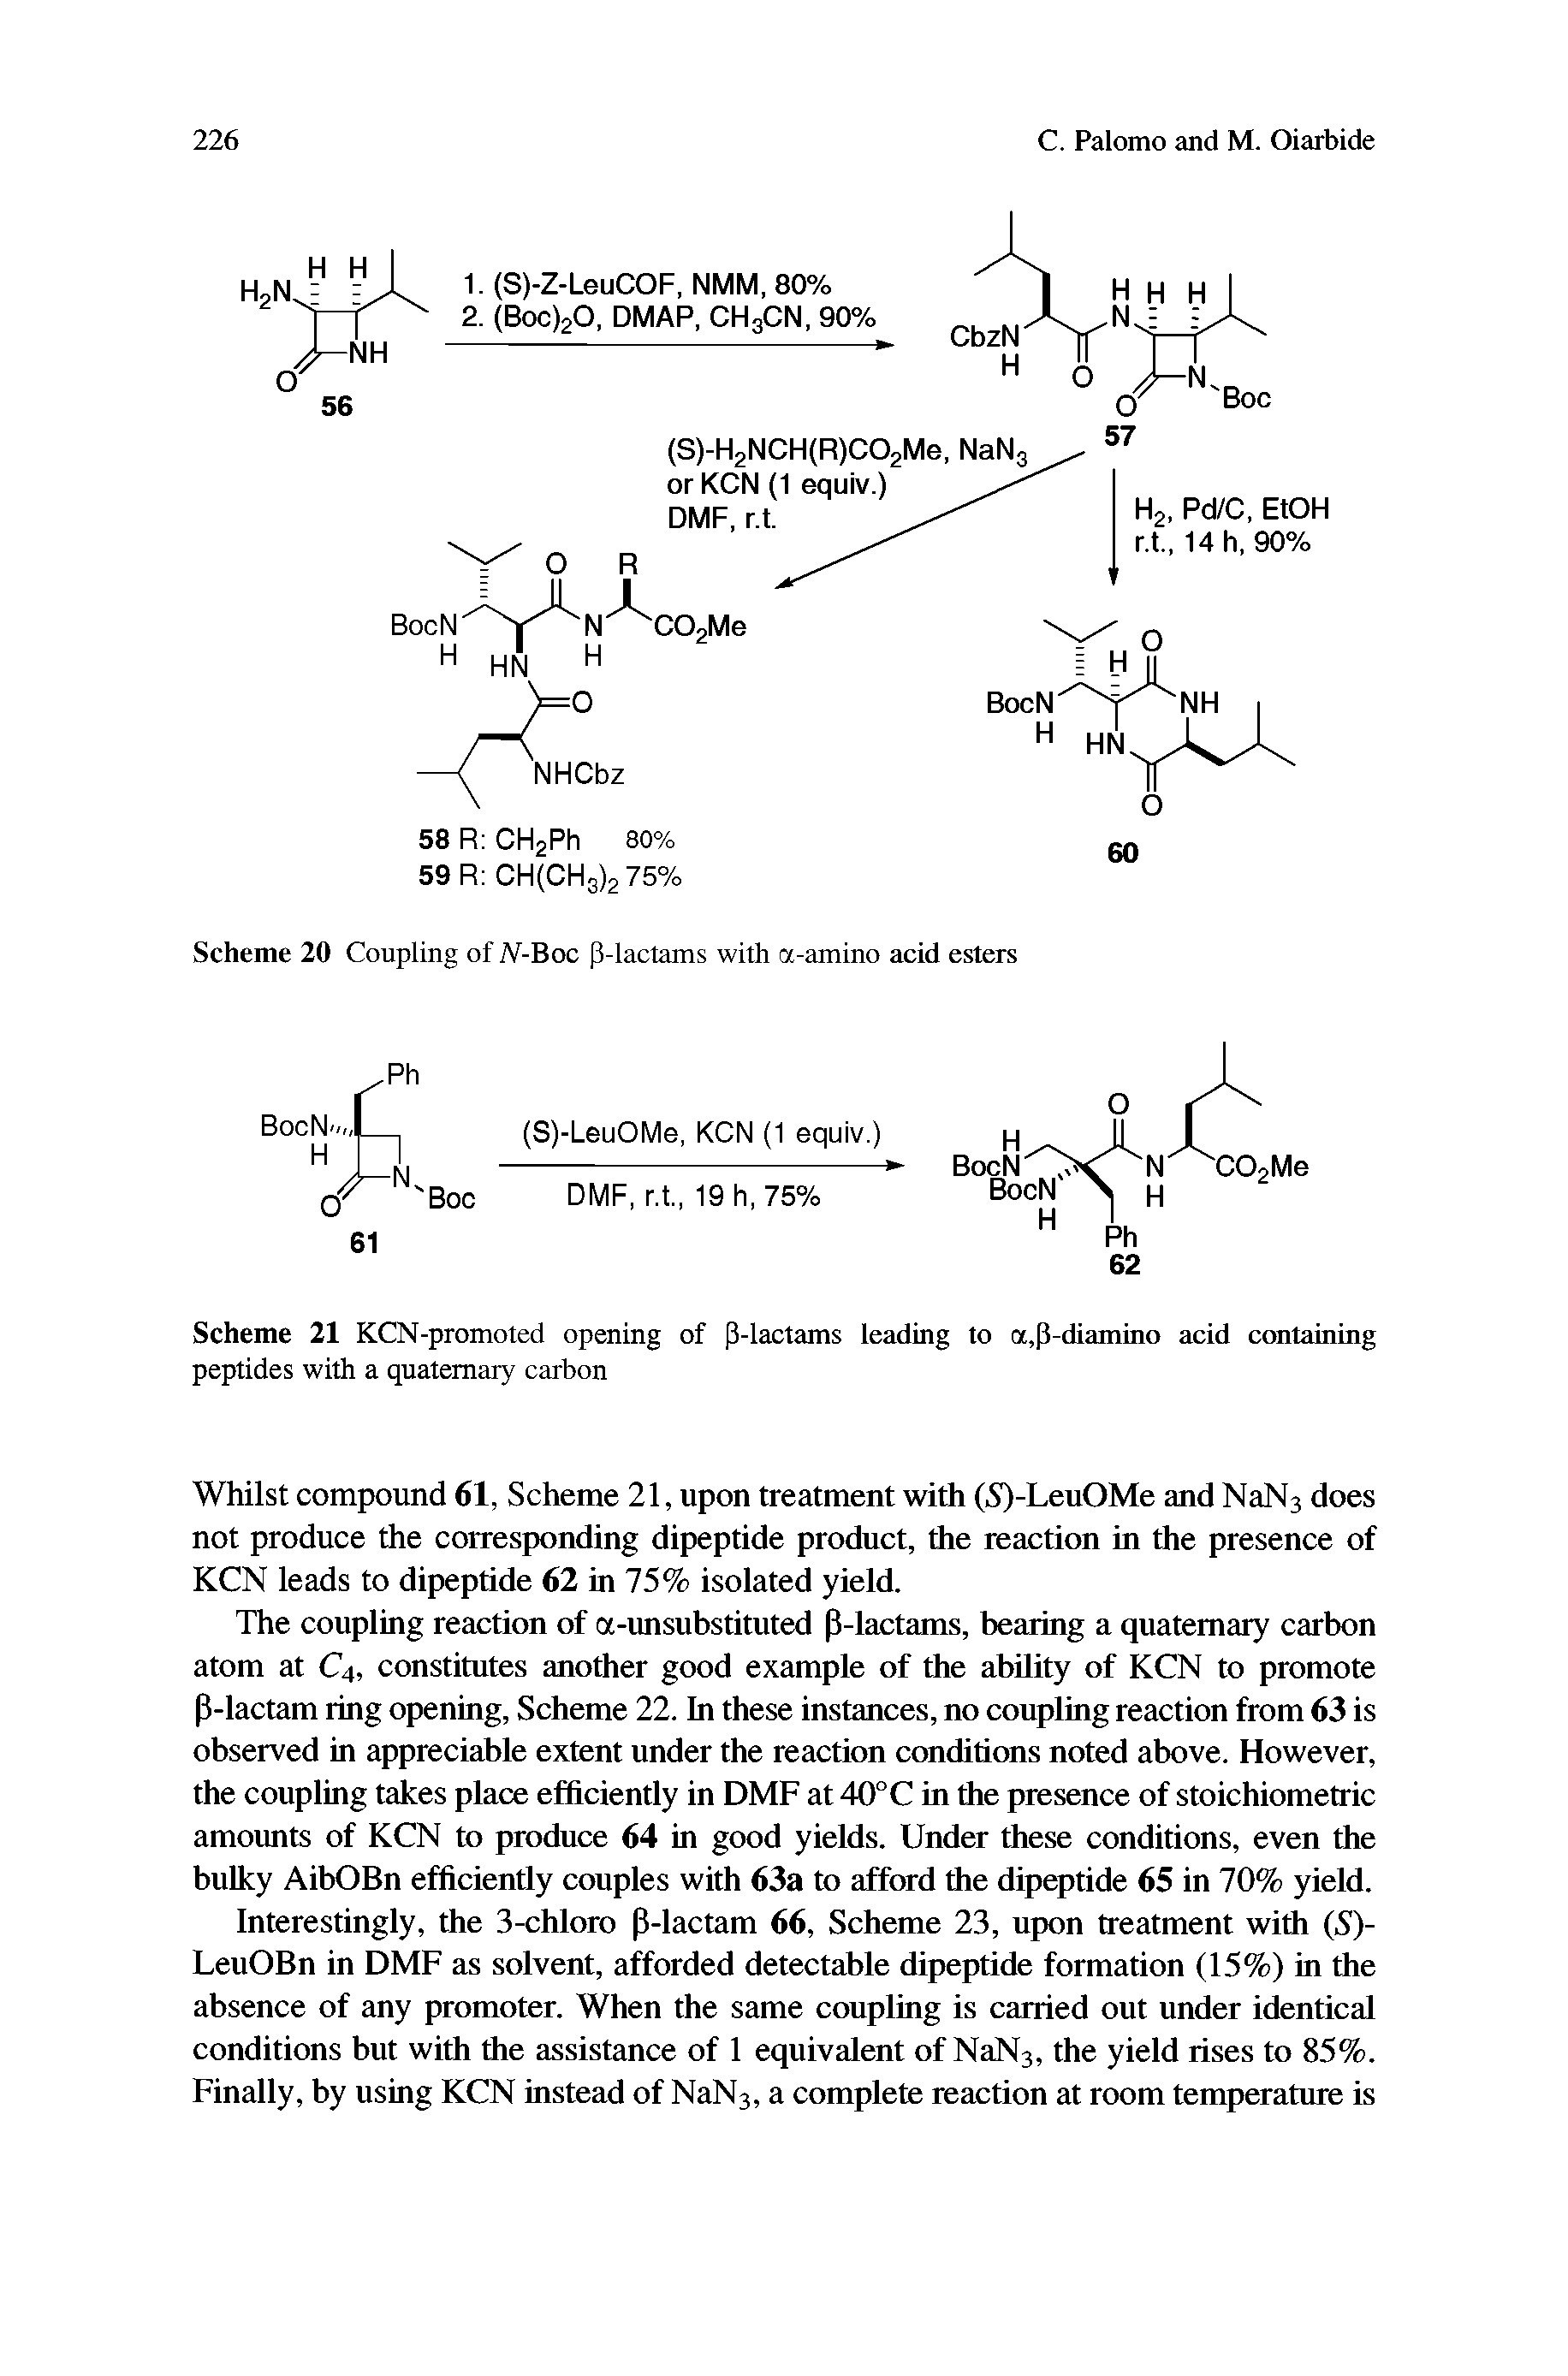 Scheme 20 Coupling of Af-Boc [3-lactams with a-amino acid esters...